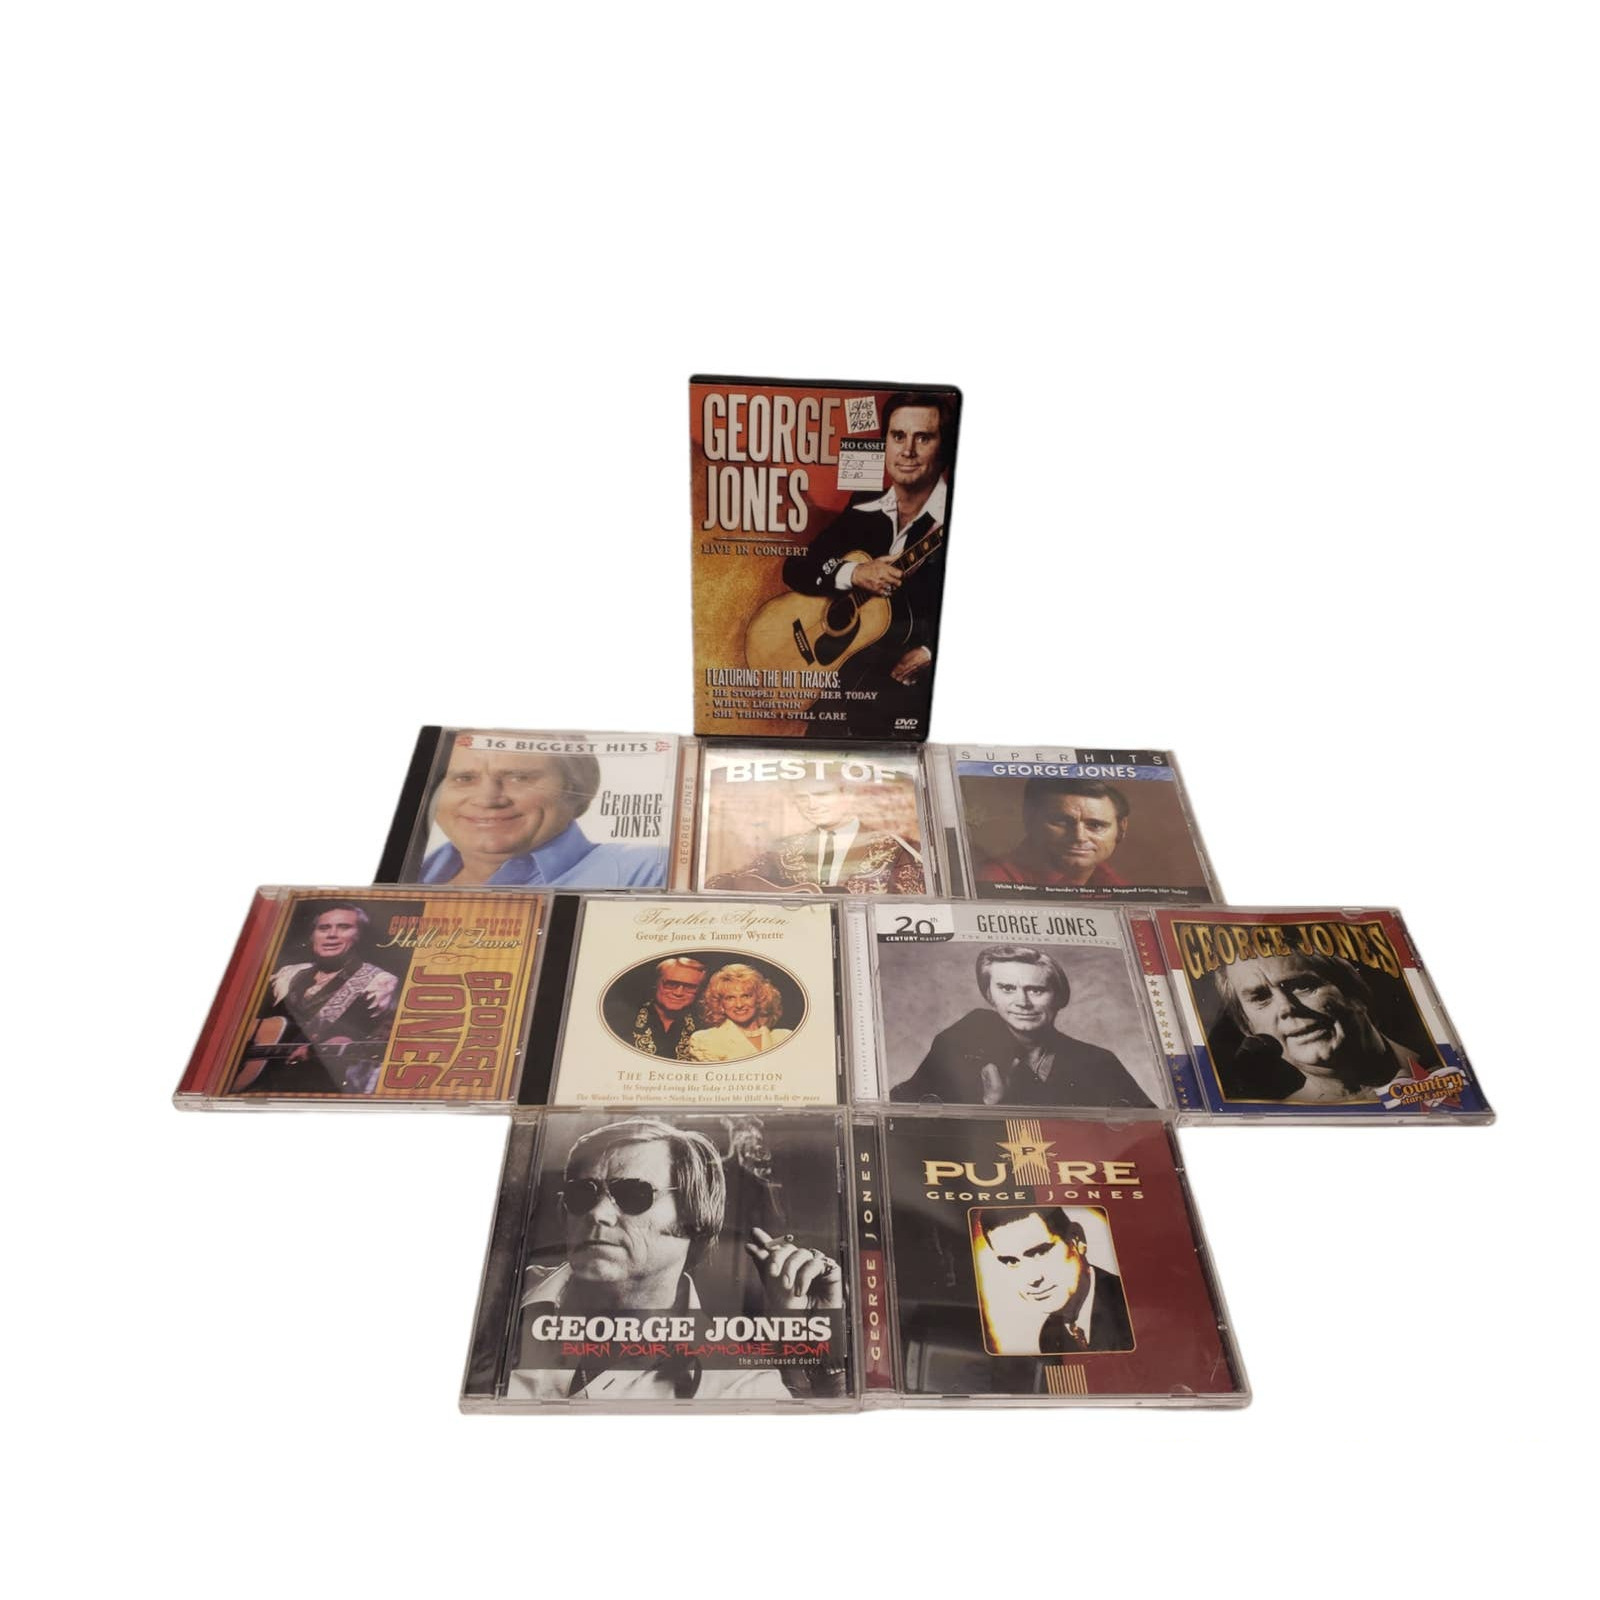 George Jones Live In Concert DVD & Biggest Hits Best Of Hall of Fame CD Bundle